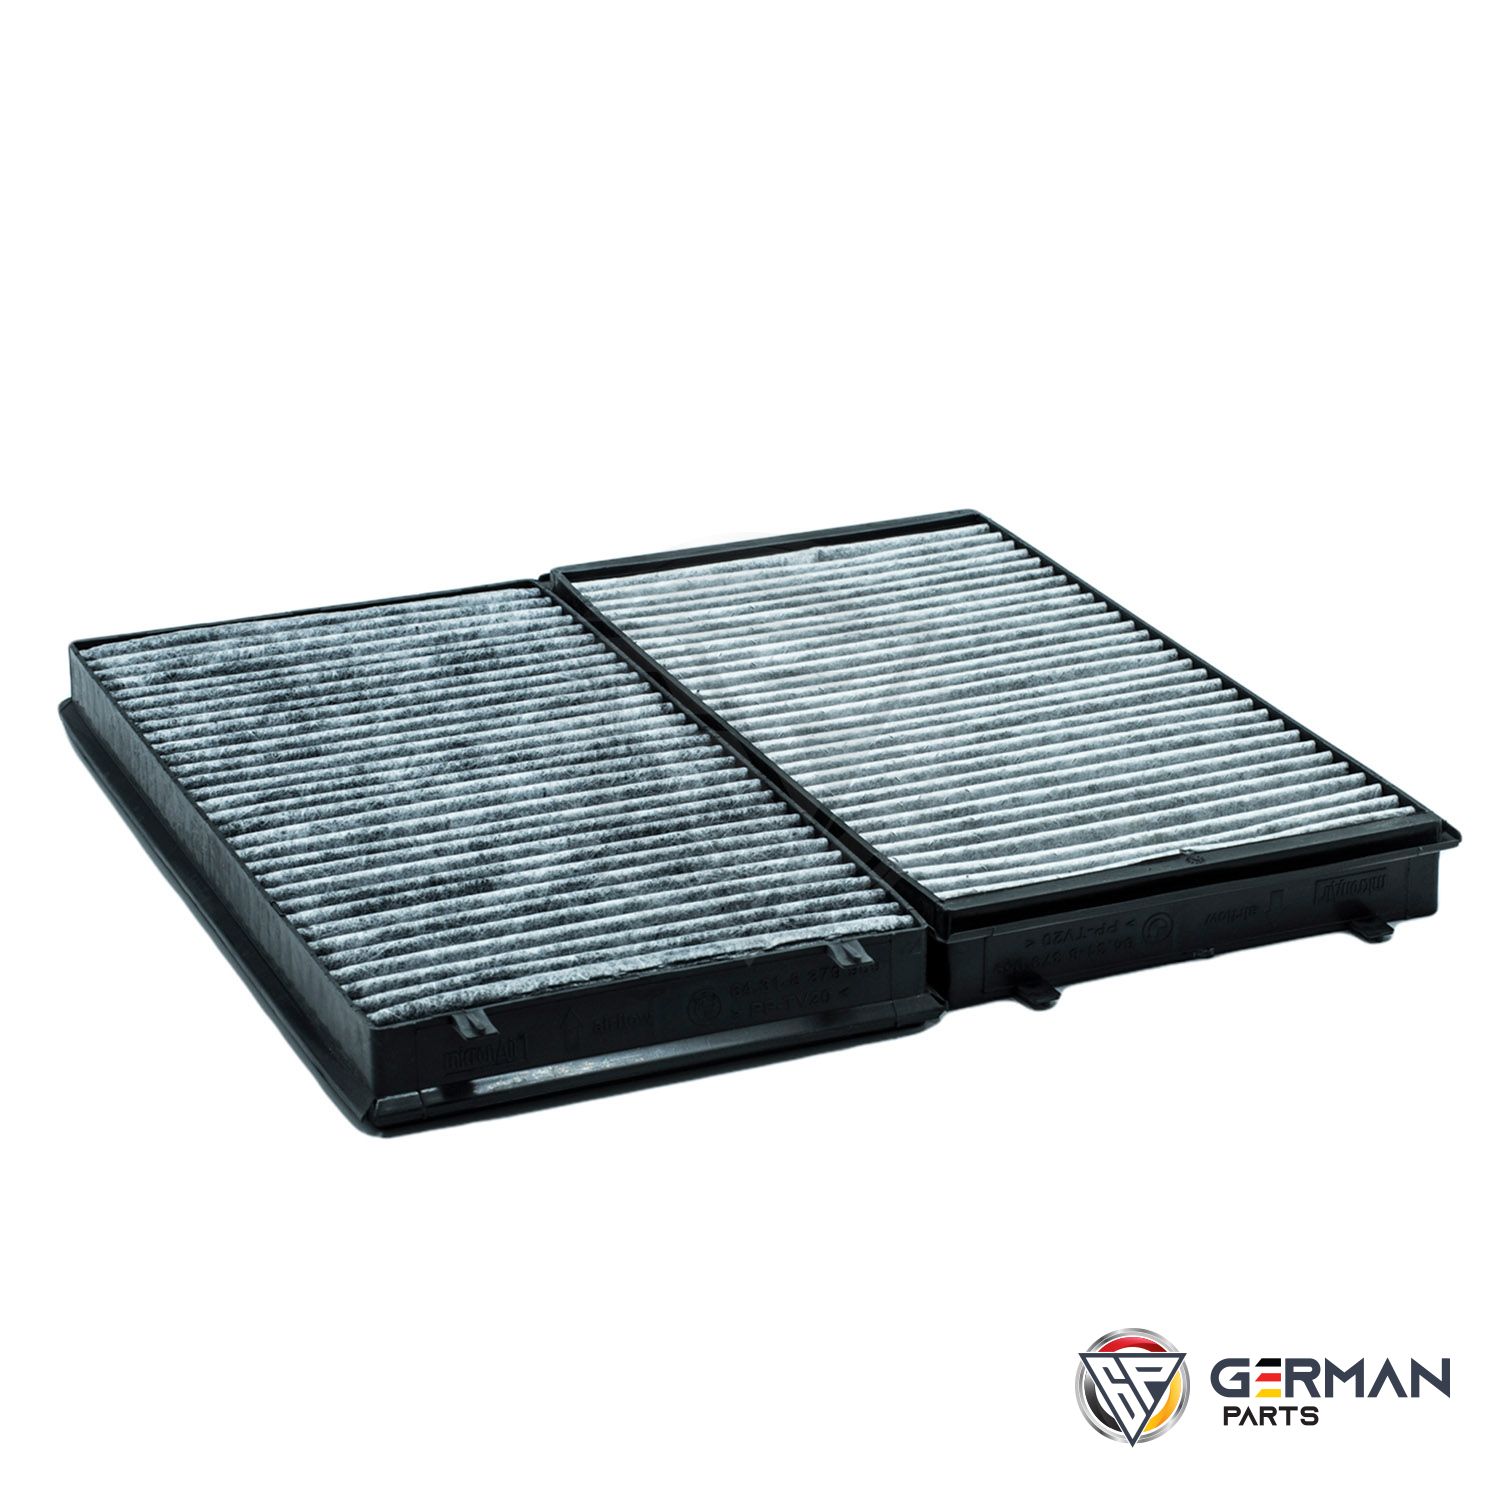 Buy BMW Ac Dust Filter 64116921019 - German Parts